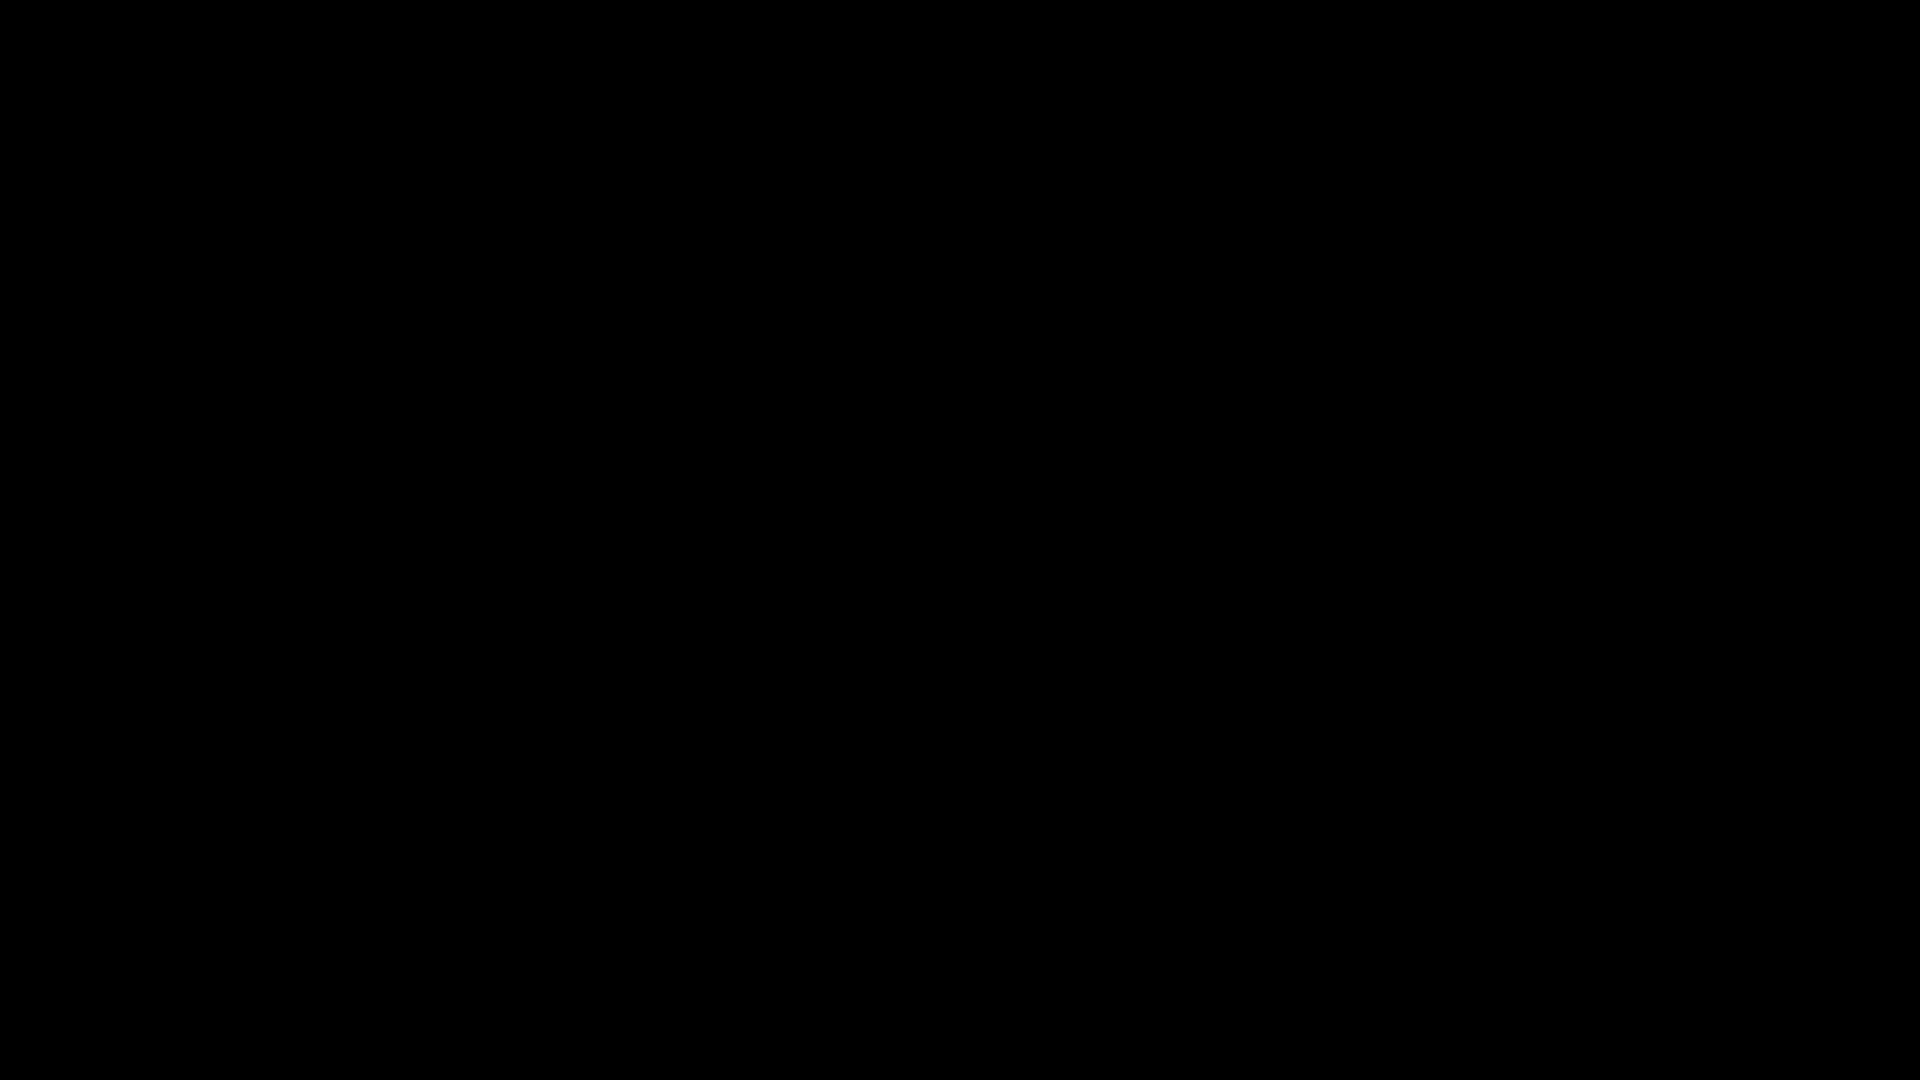 Aura cinemas branding-logo concept